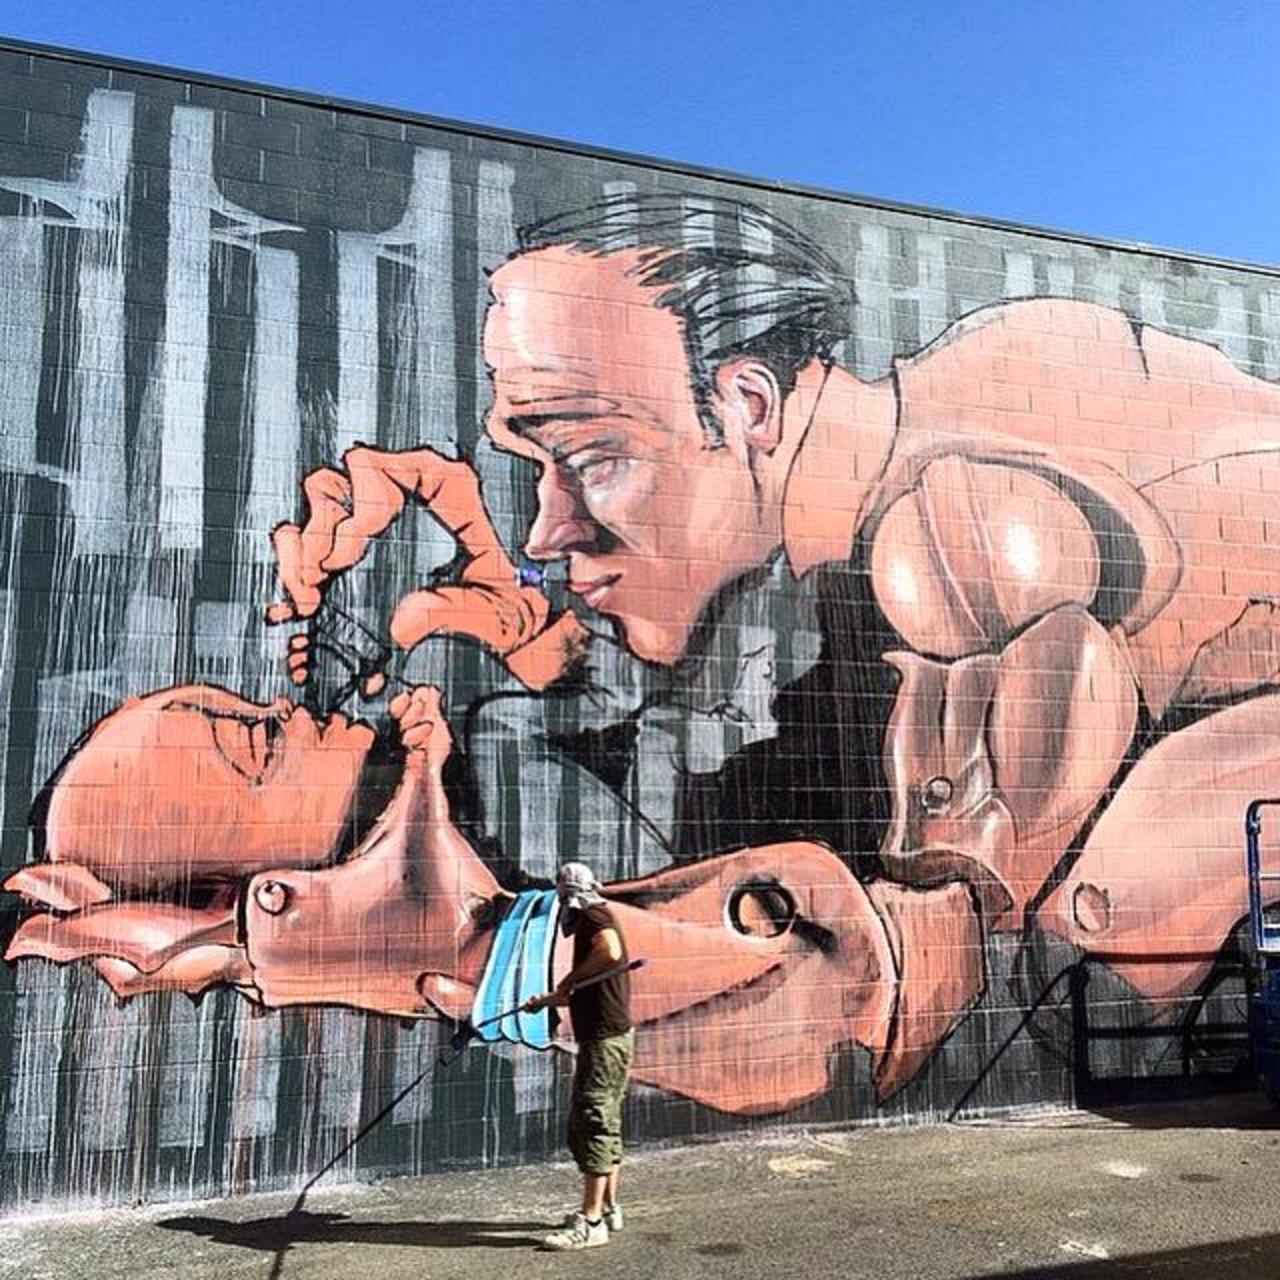 #Akut's fantastic #mural at @POWWOWHAWAII
(via: @scotthawaii) #wip #urbanart #streetart #graffiti http://t.co/mgatVE8yi3